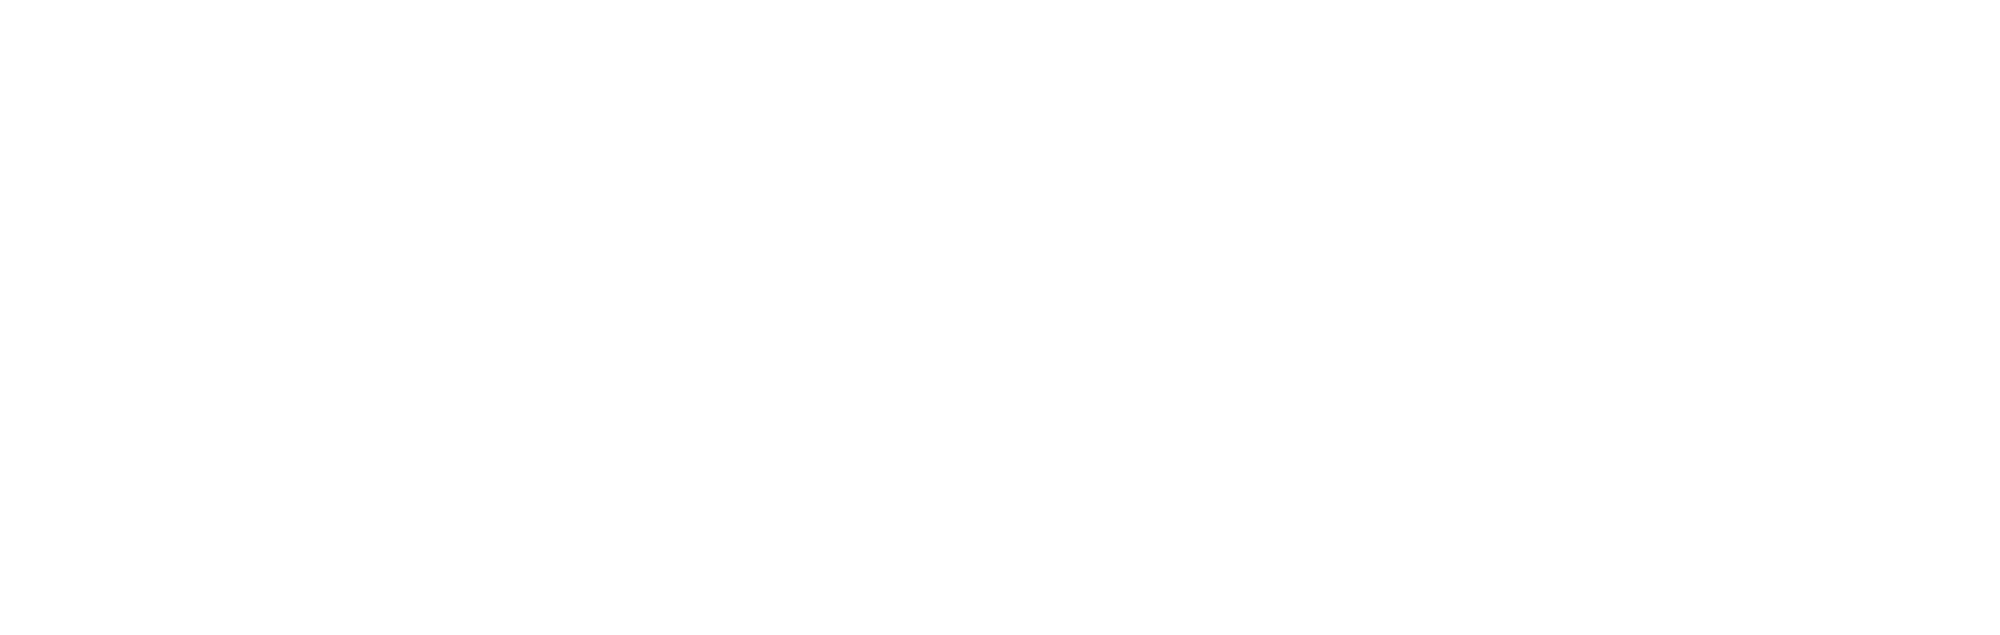 Ultra High End Apparel 3D Visualization